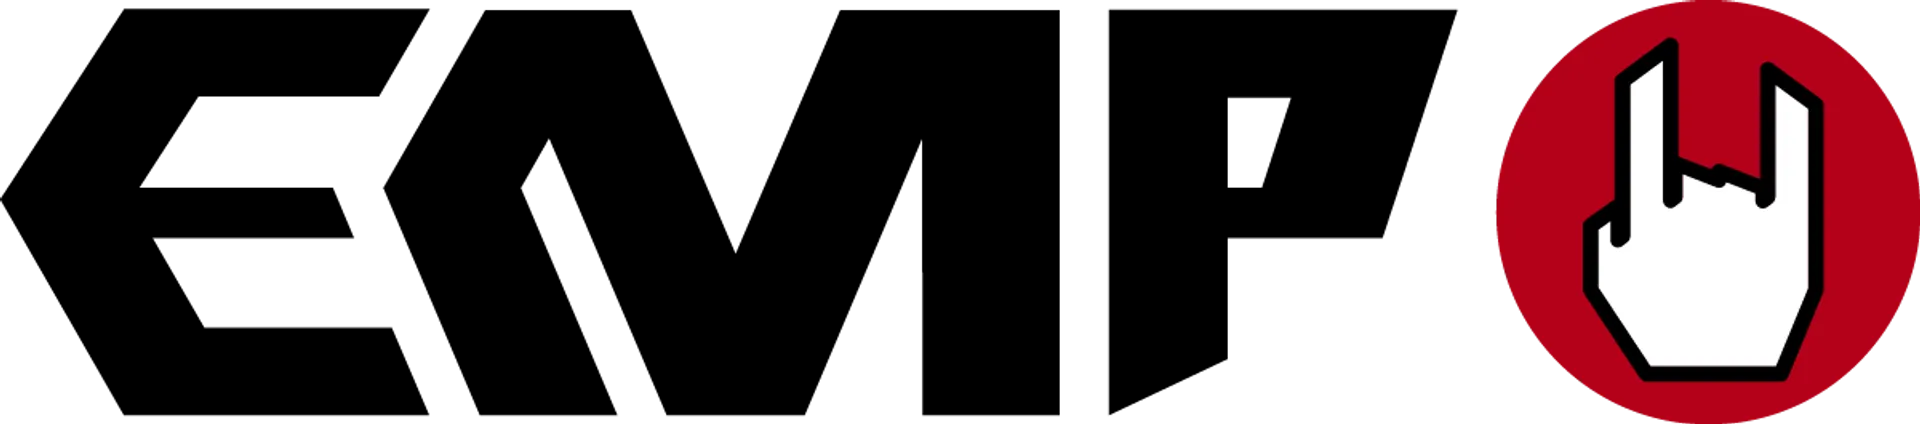 EMP logo die aktuell Flugblatt